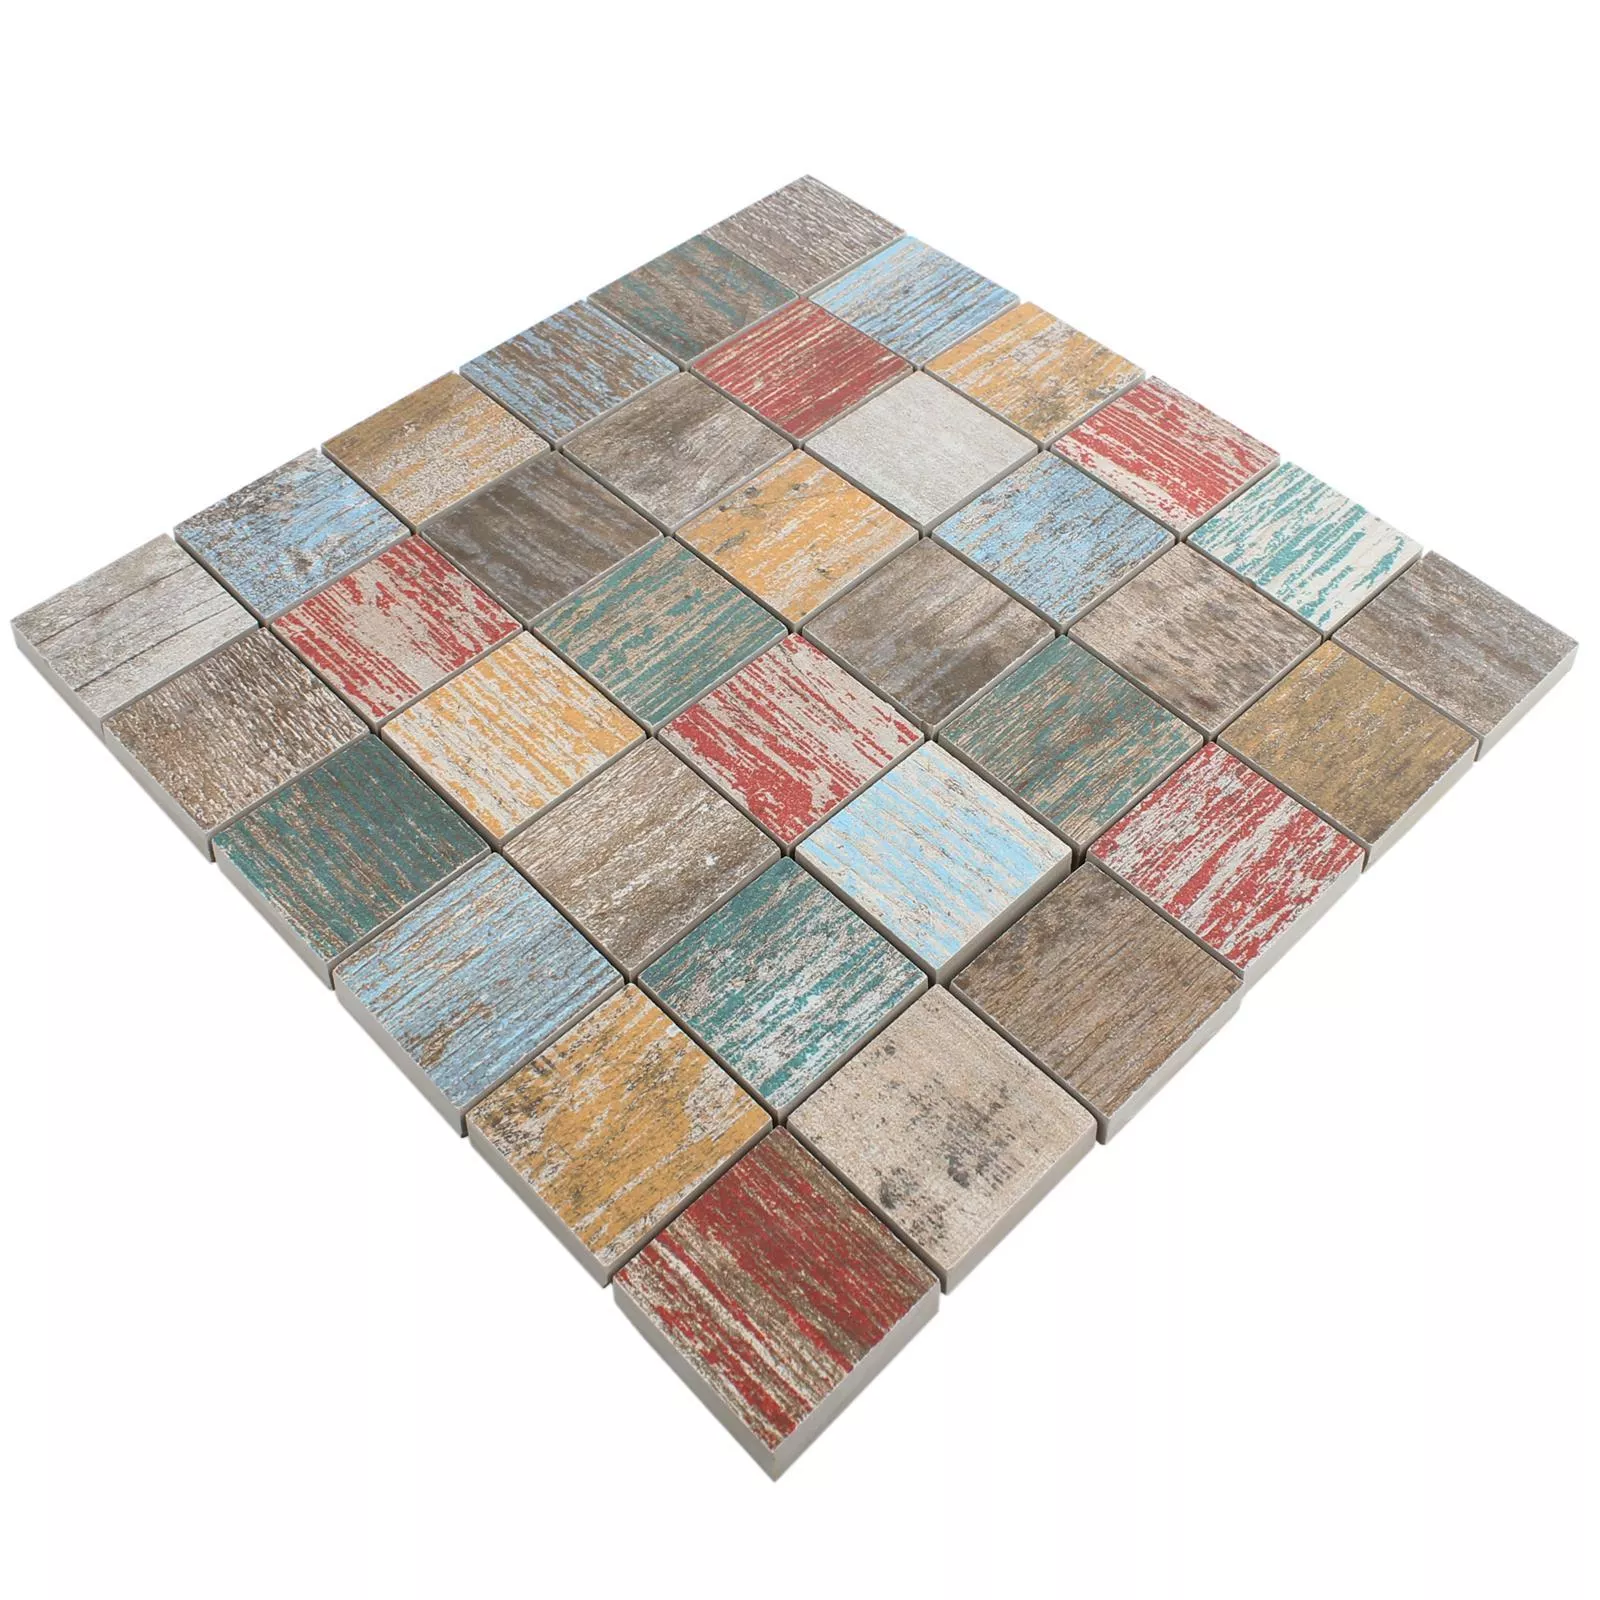 Sample Ceramic Mosaic Tiles Concerto Colored Square R10/B